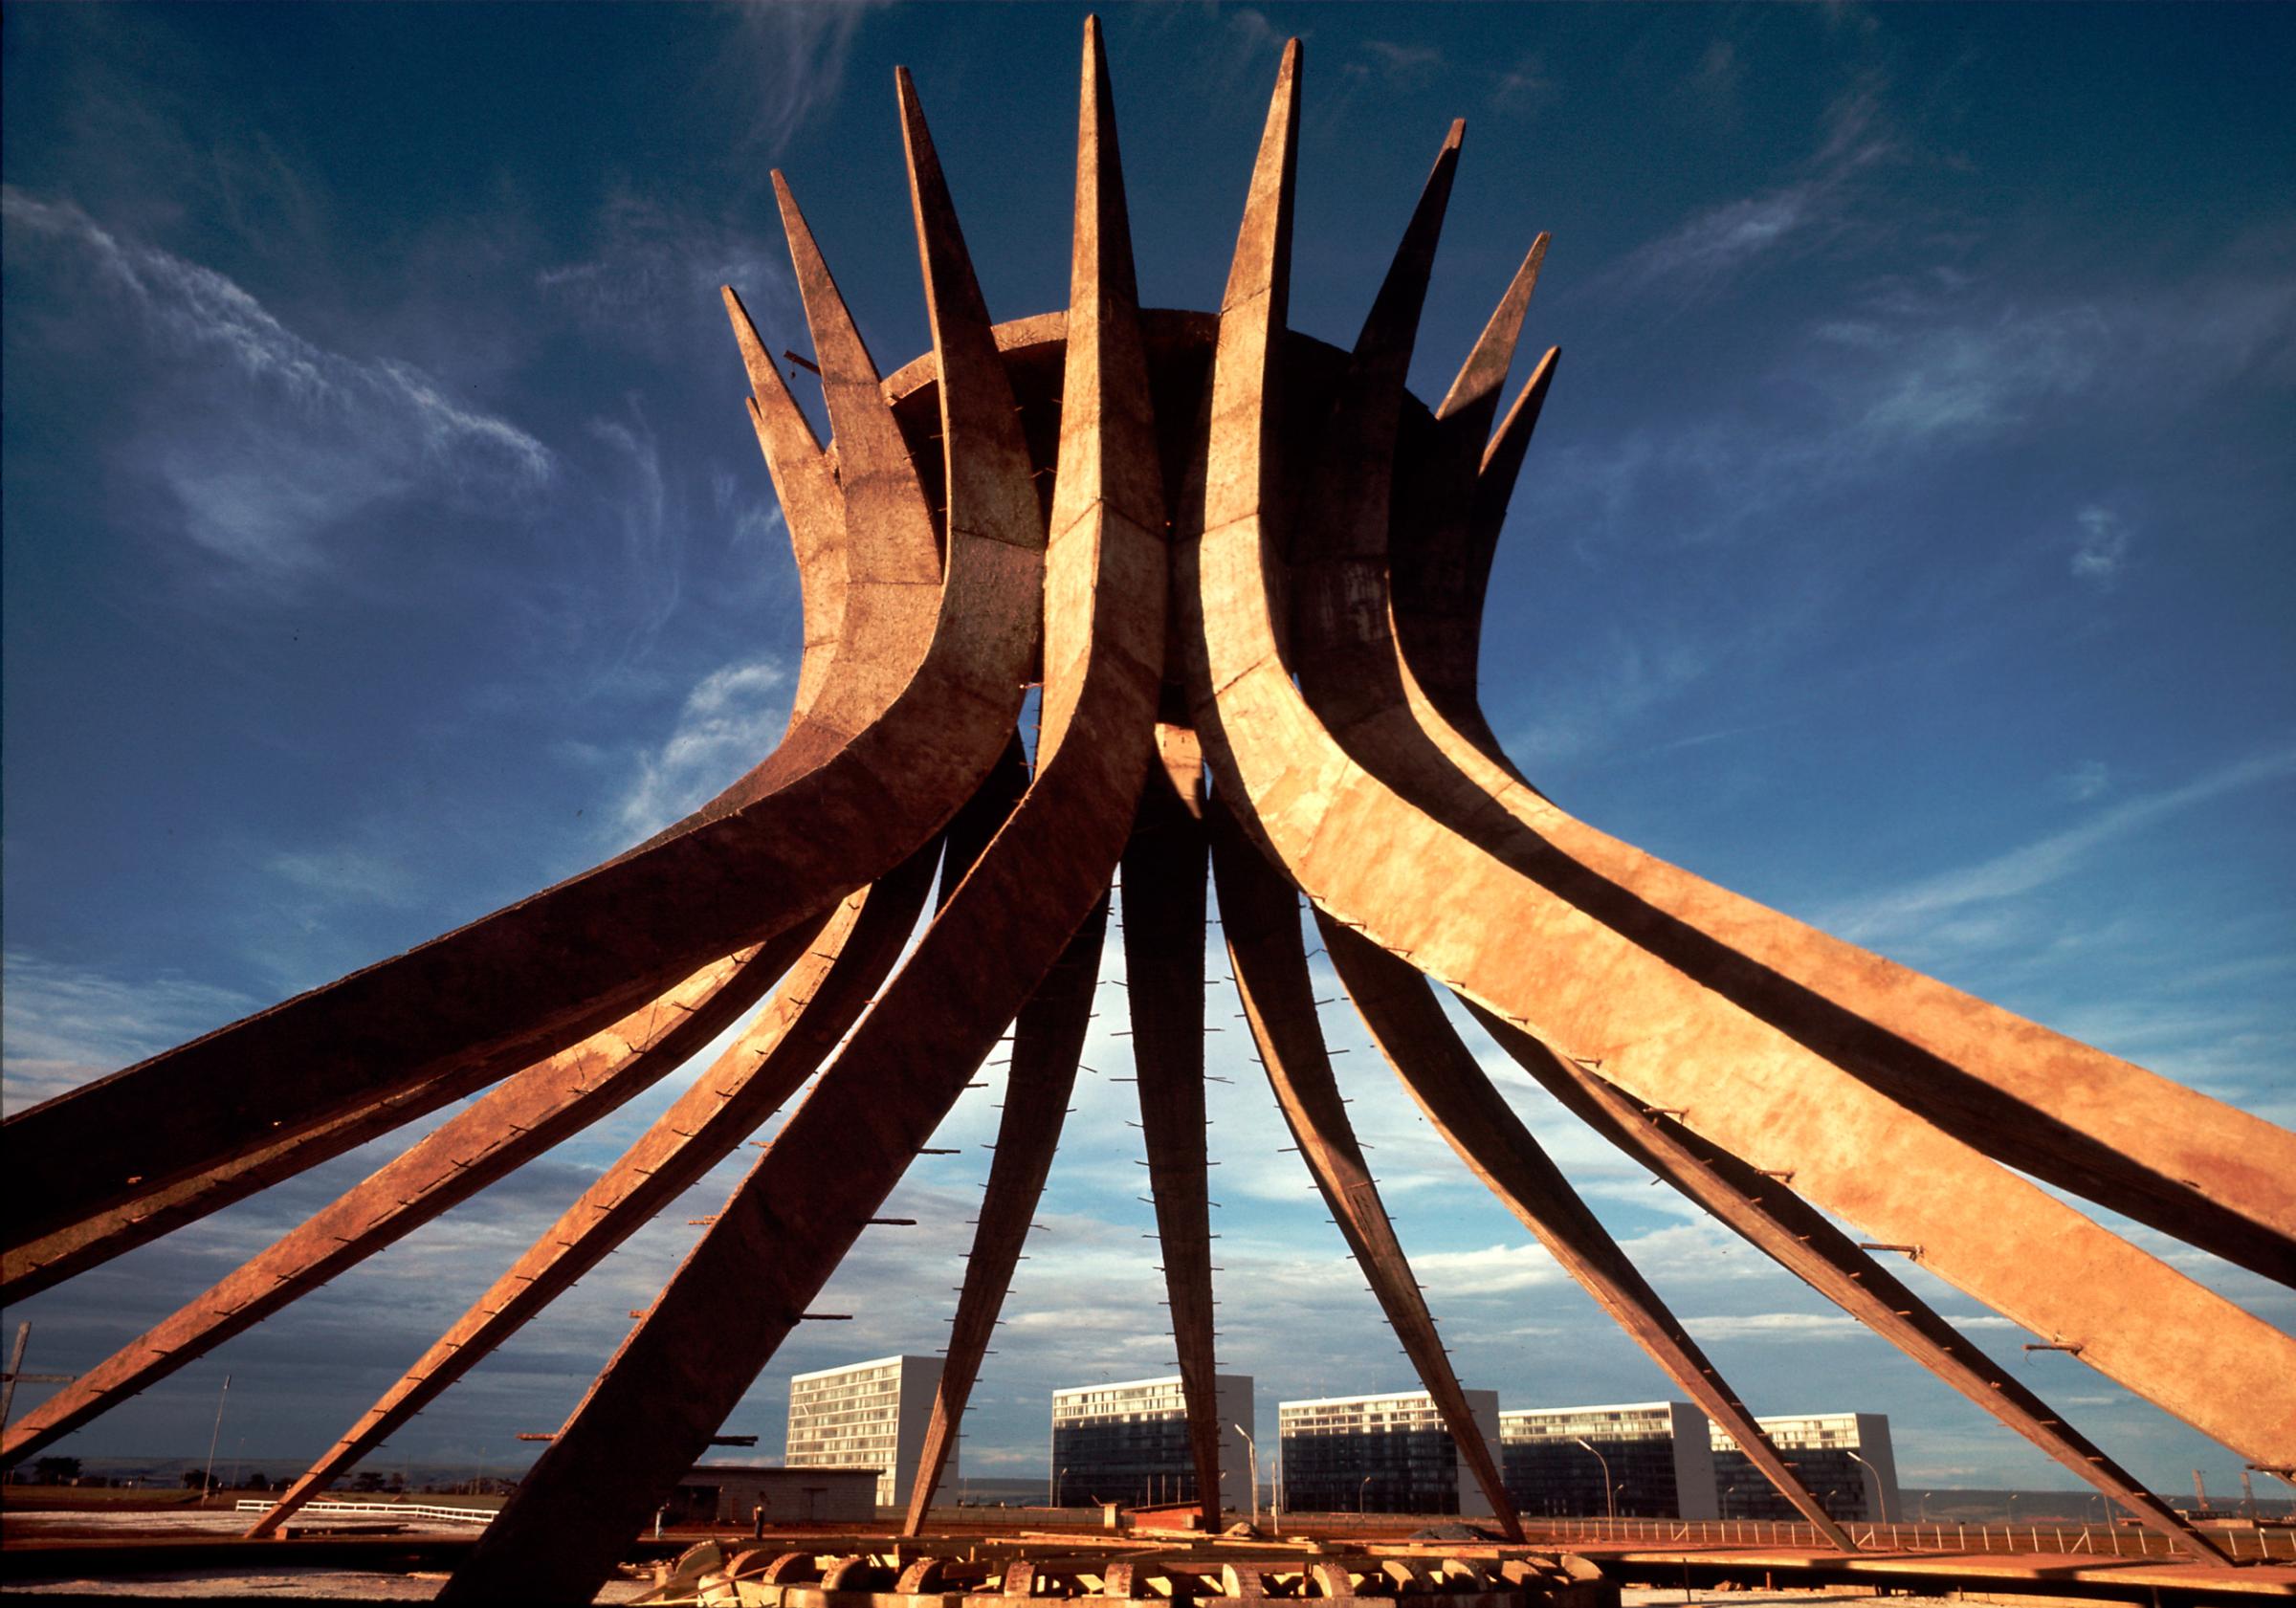 Cathedral of Brasília (framework) designed by Oscar Niemeyer, 1961.